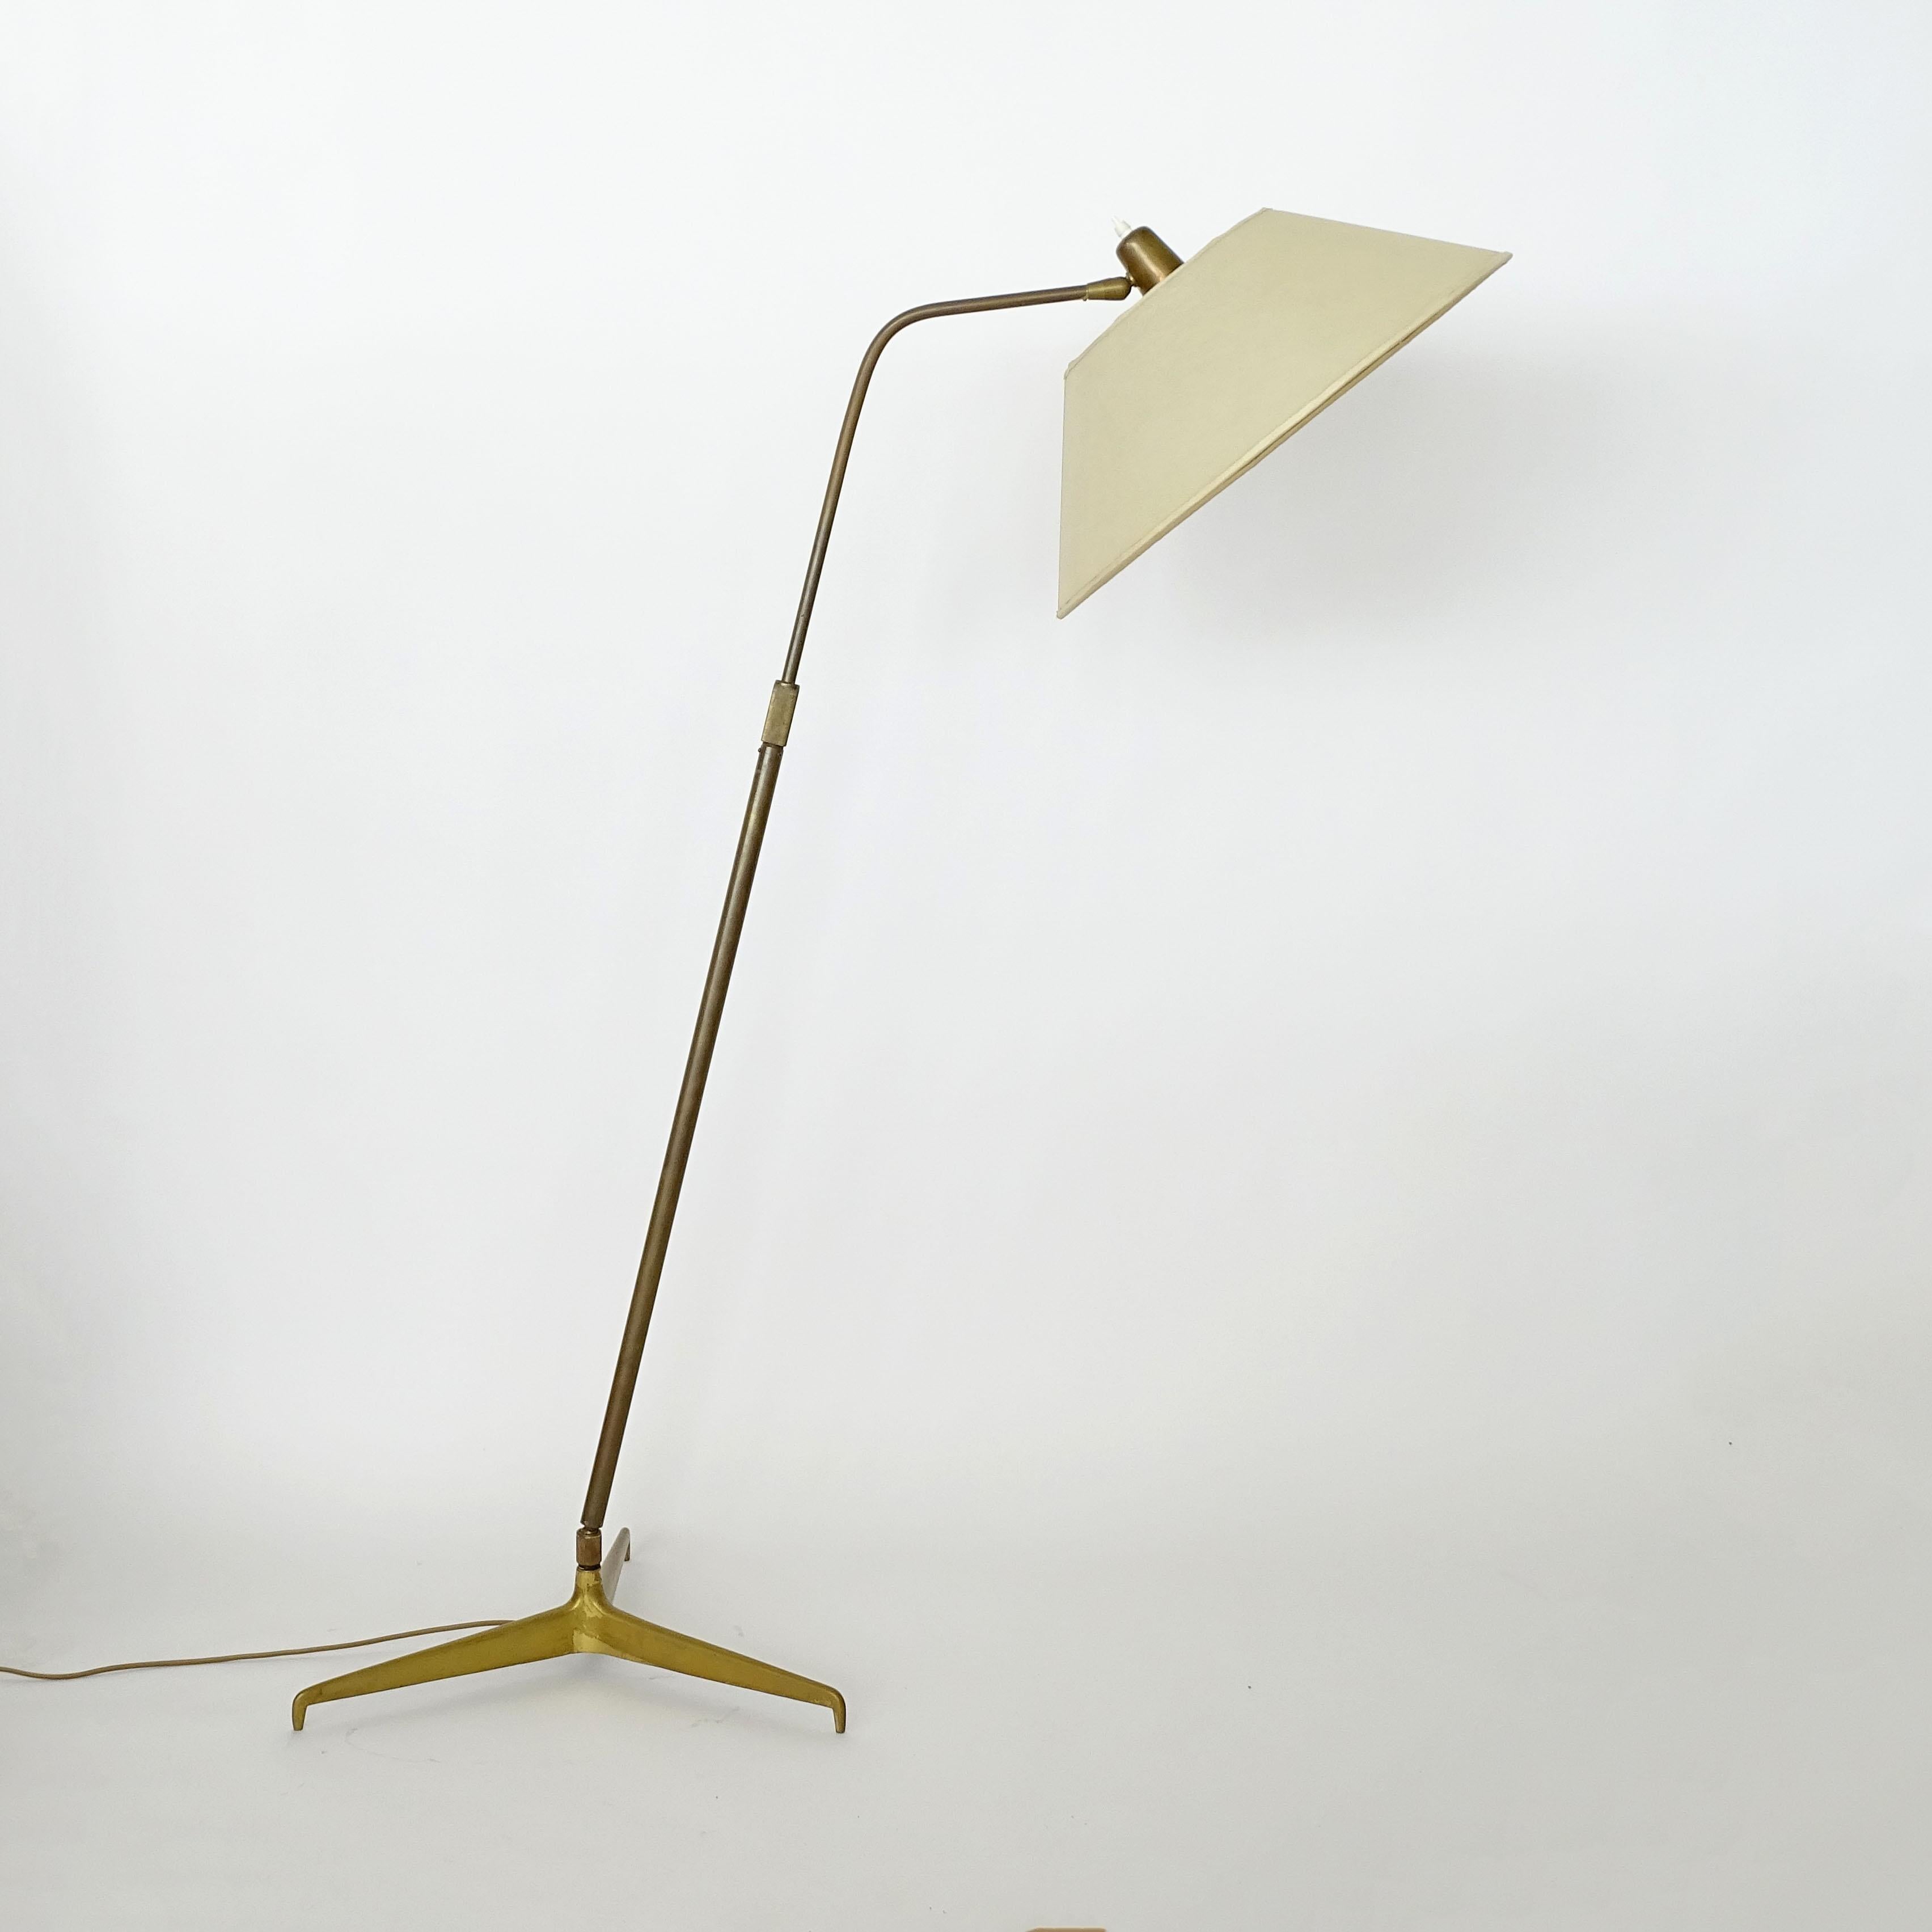 Giuseppe Ostuni adjustable brass floor lamp for Oluce, Italy 1950s
